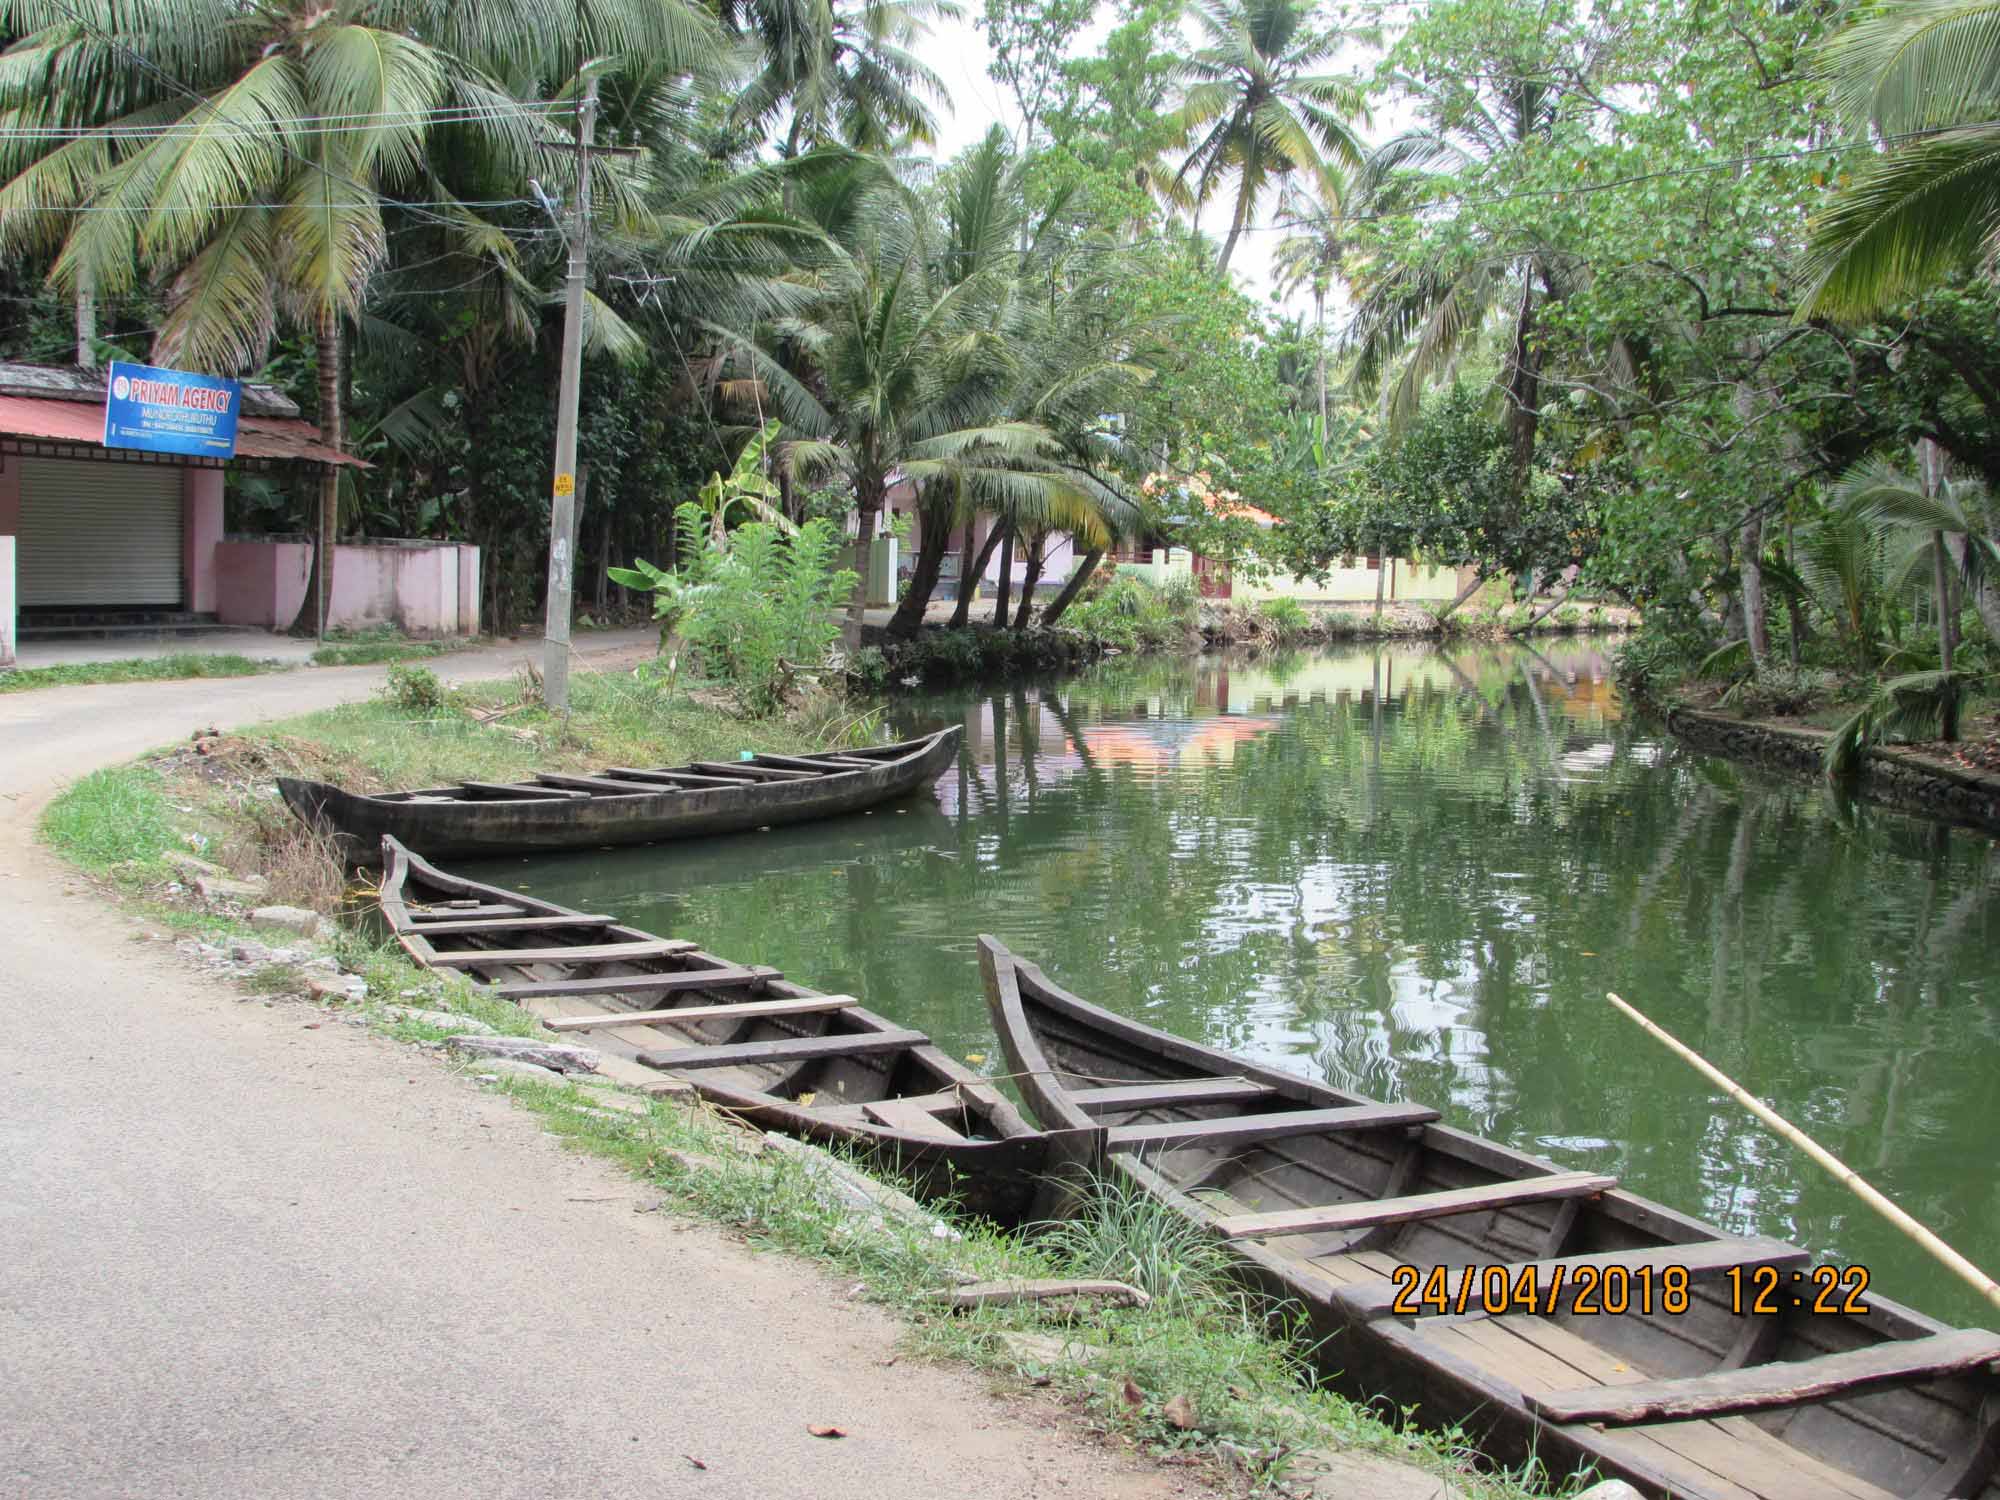 A traditional Canoe ride through Mundrothuruthu / Munroe Islands (Kollam, Kerala, India)